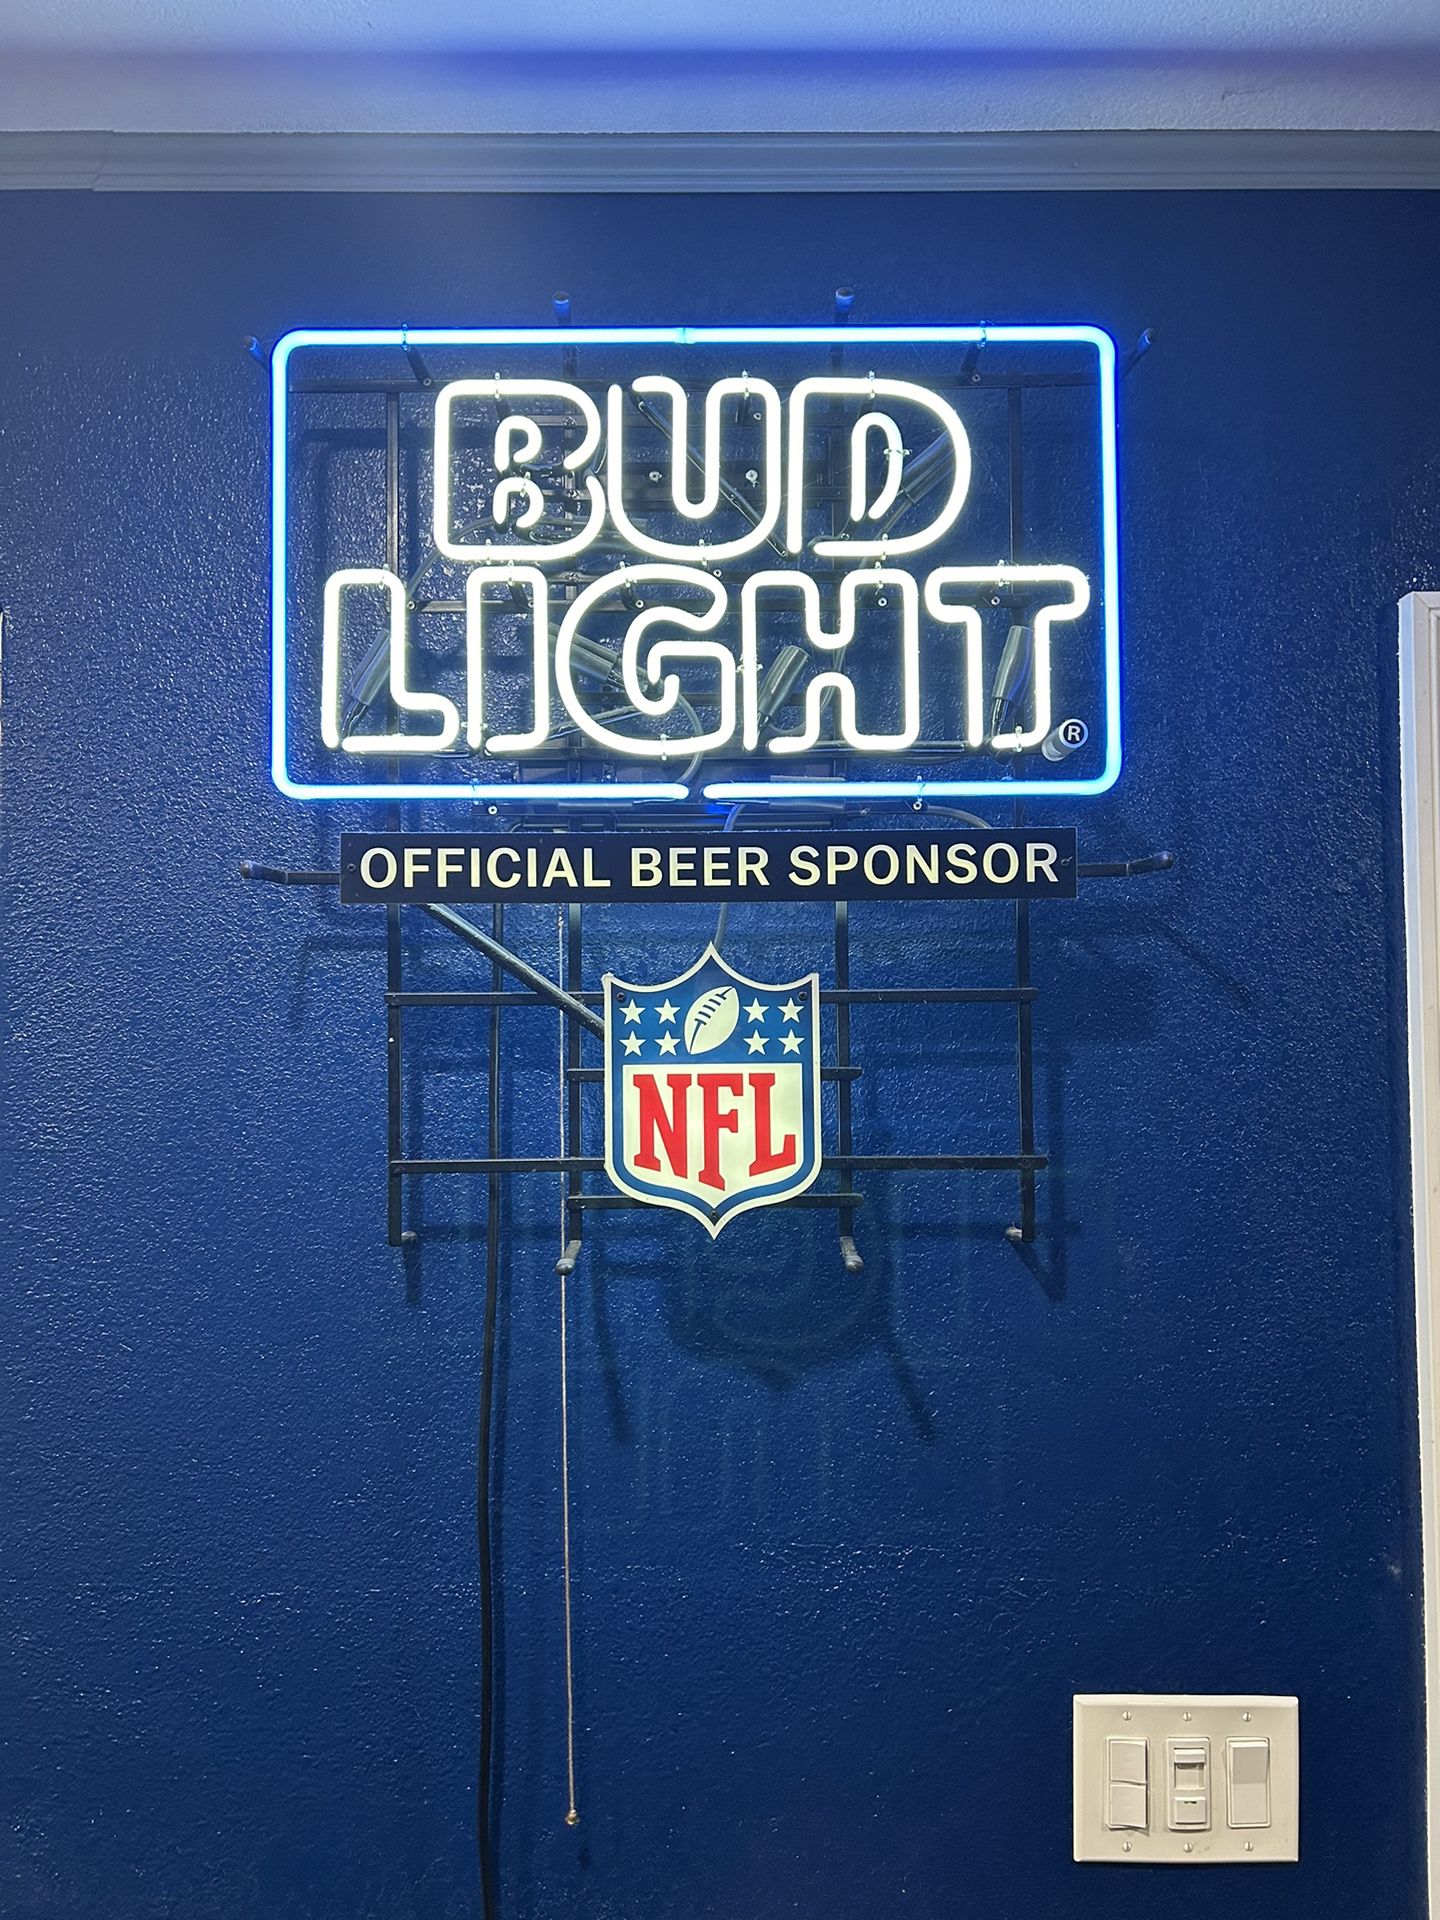 Bud Light NFL  Neon Bar sign 